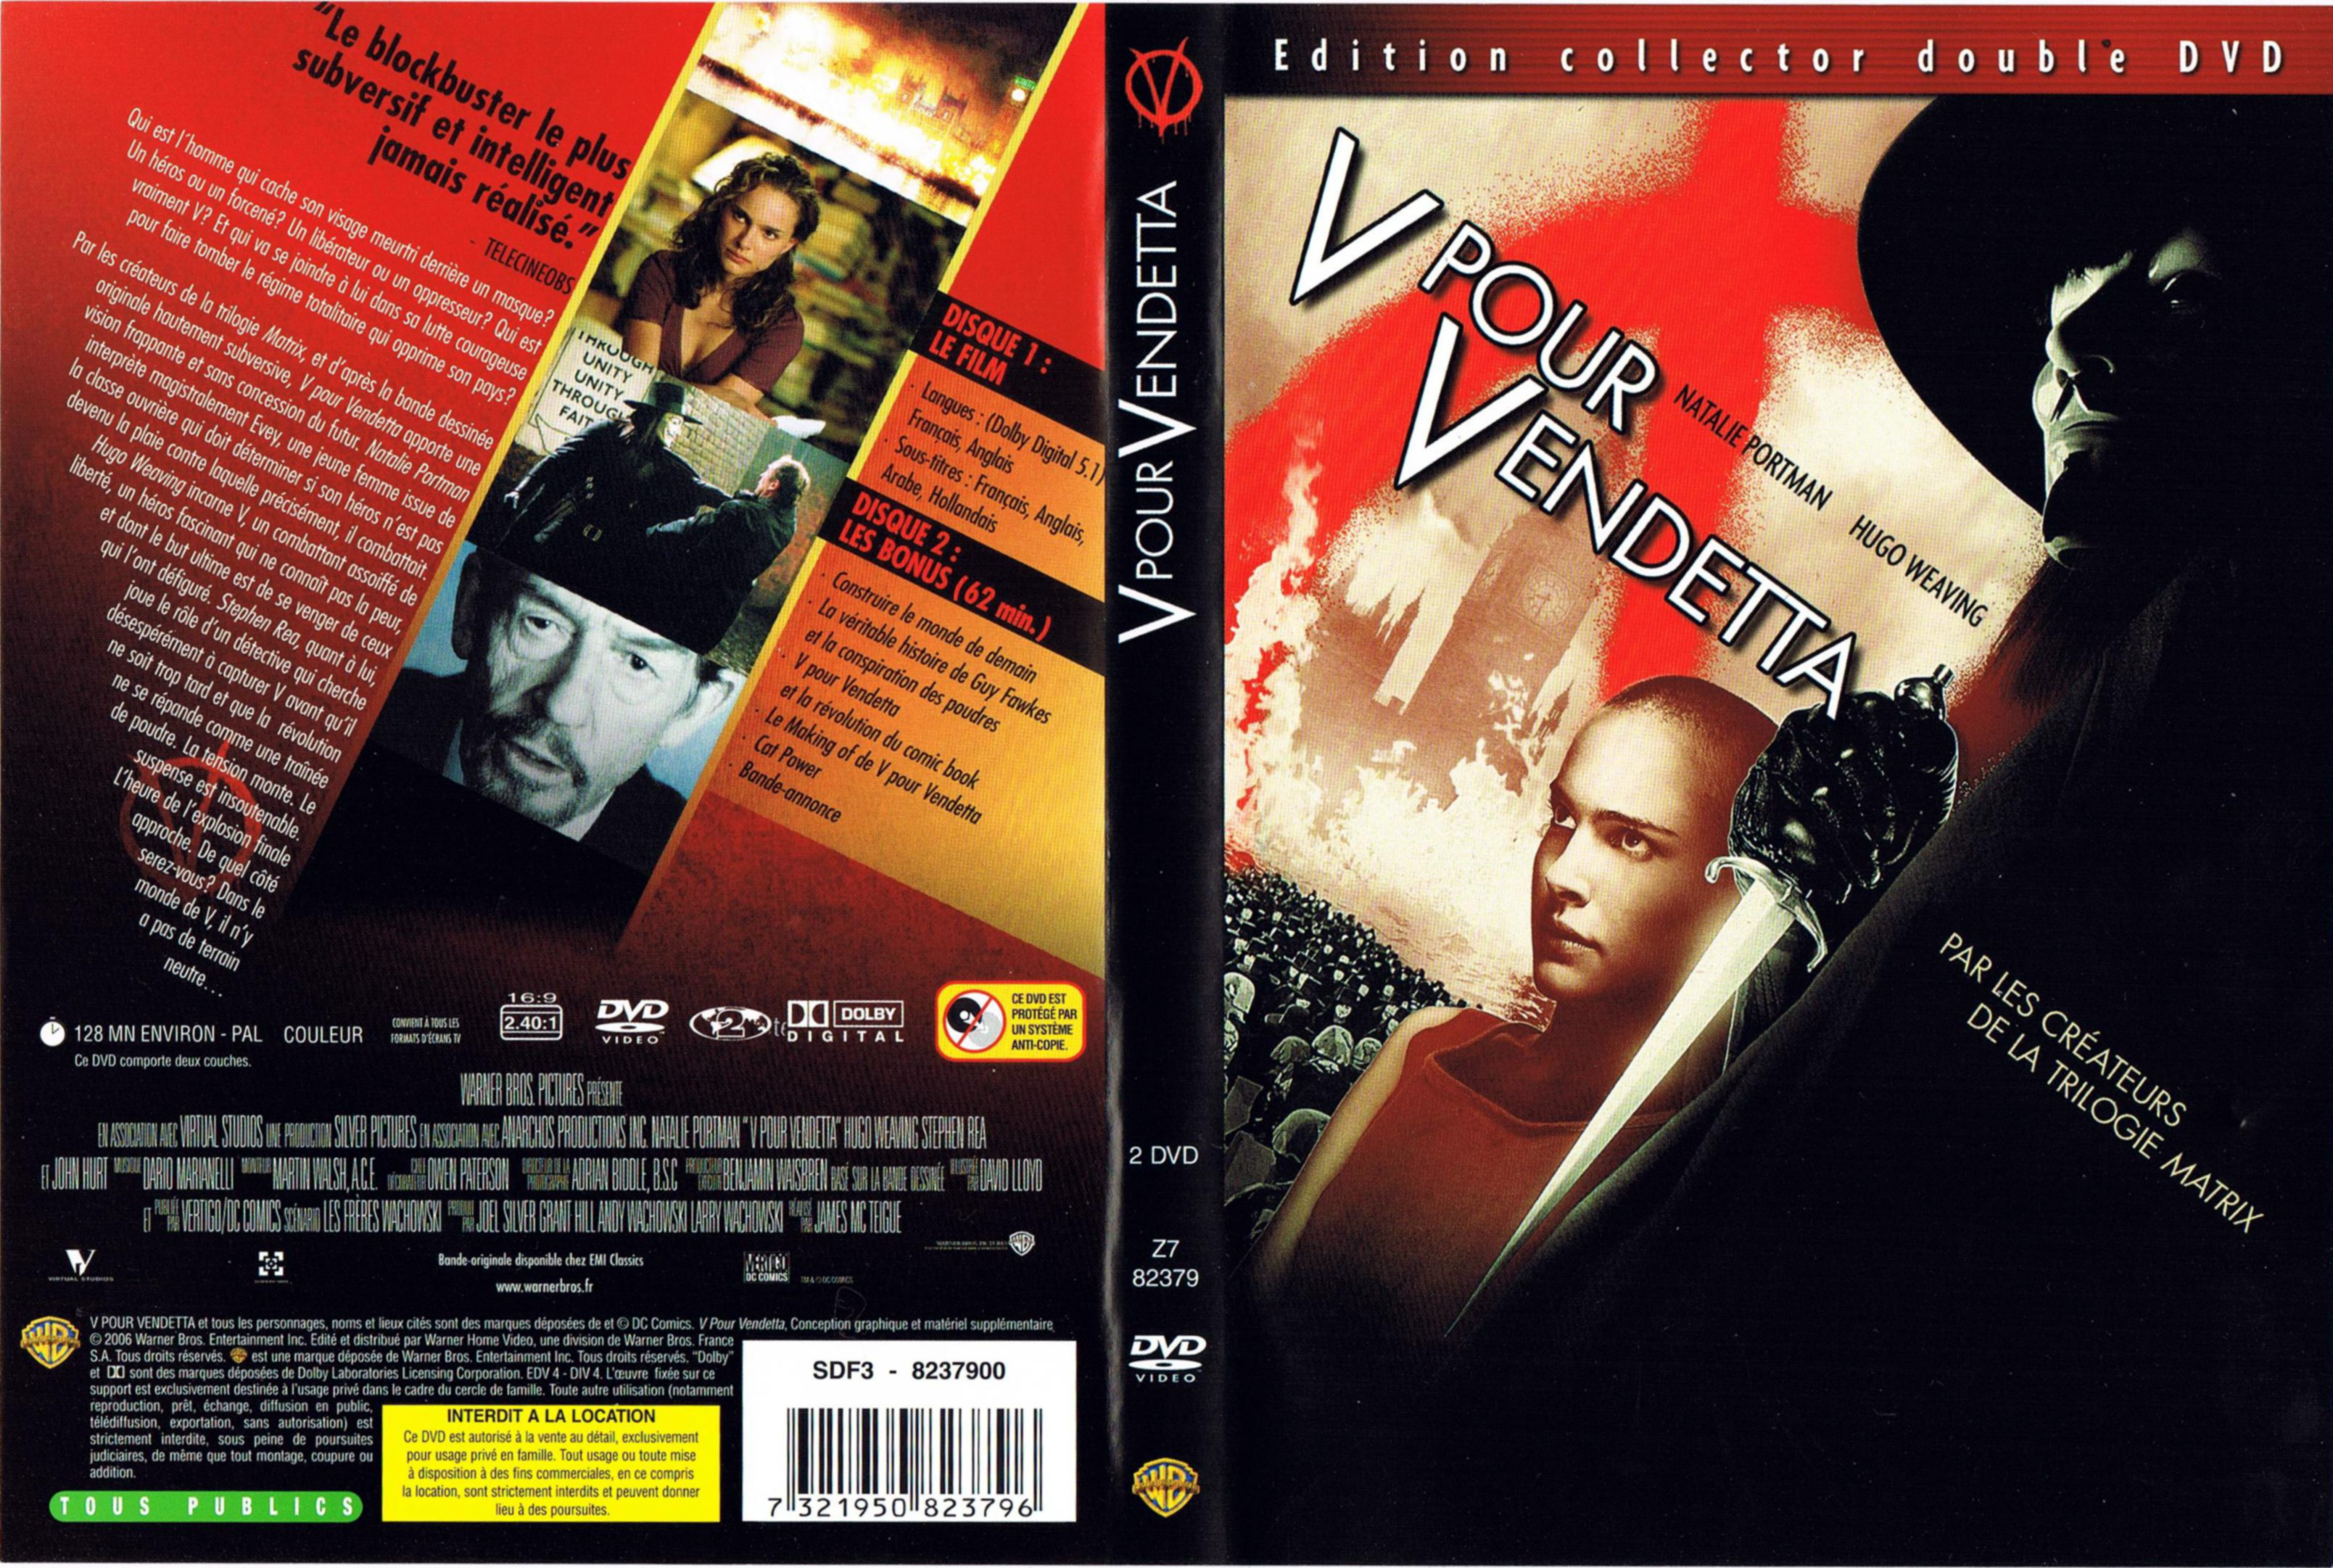 Jaquette DVD V pour vendetta v2